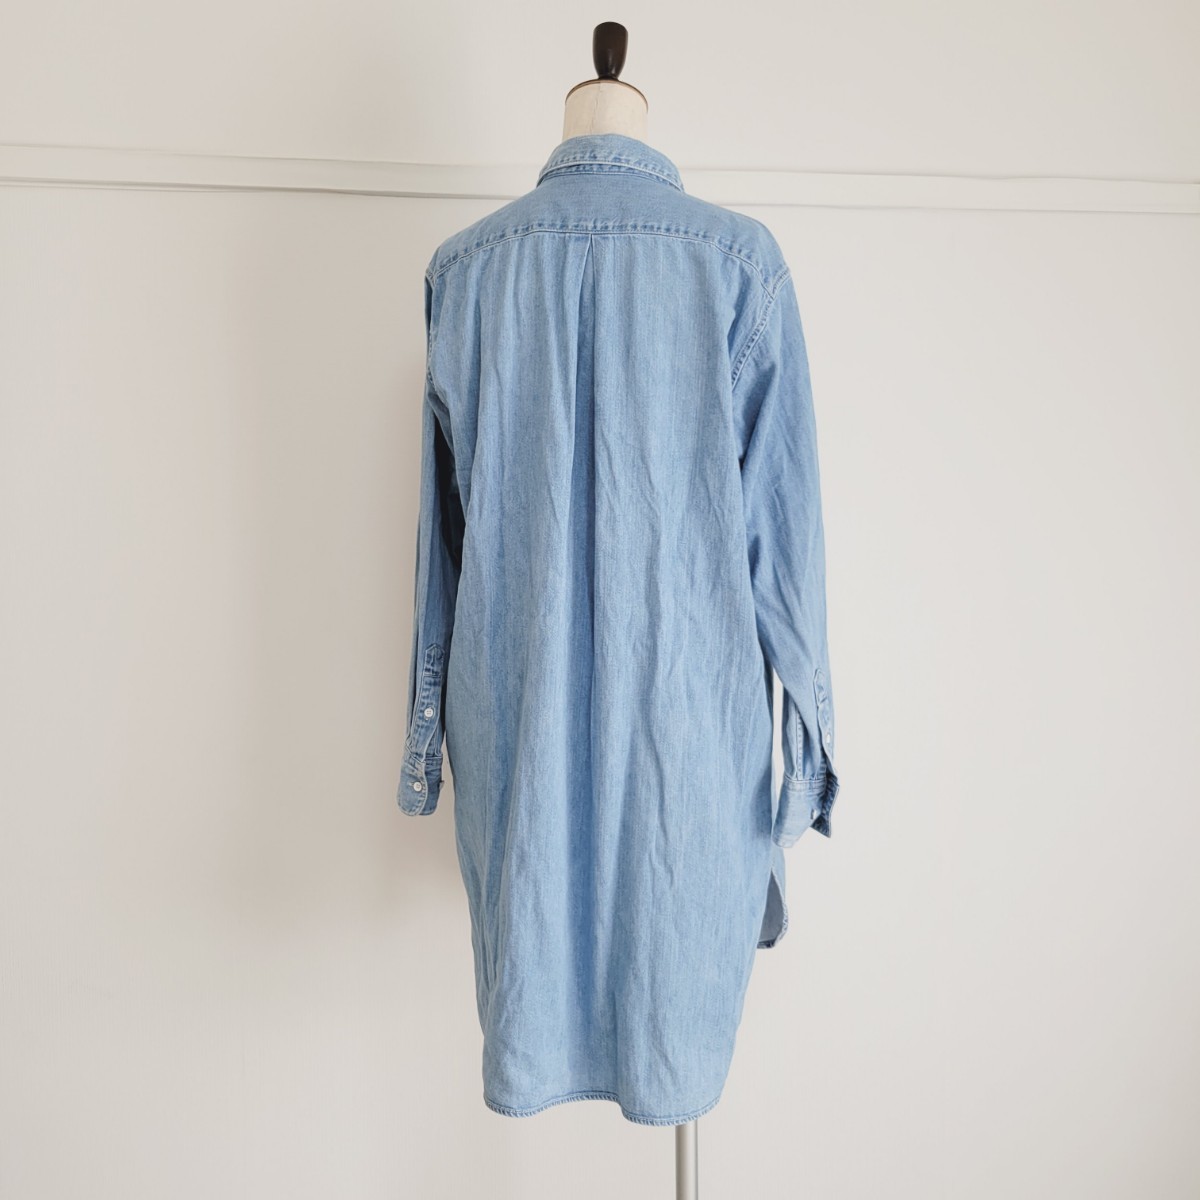  Tomorrowland McAfee Denim рубашка One-piece * размер 36* весна!TOMORROWLAND MACPHEE перо ткань 